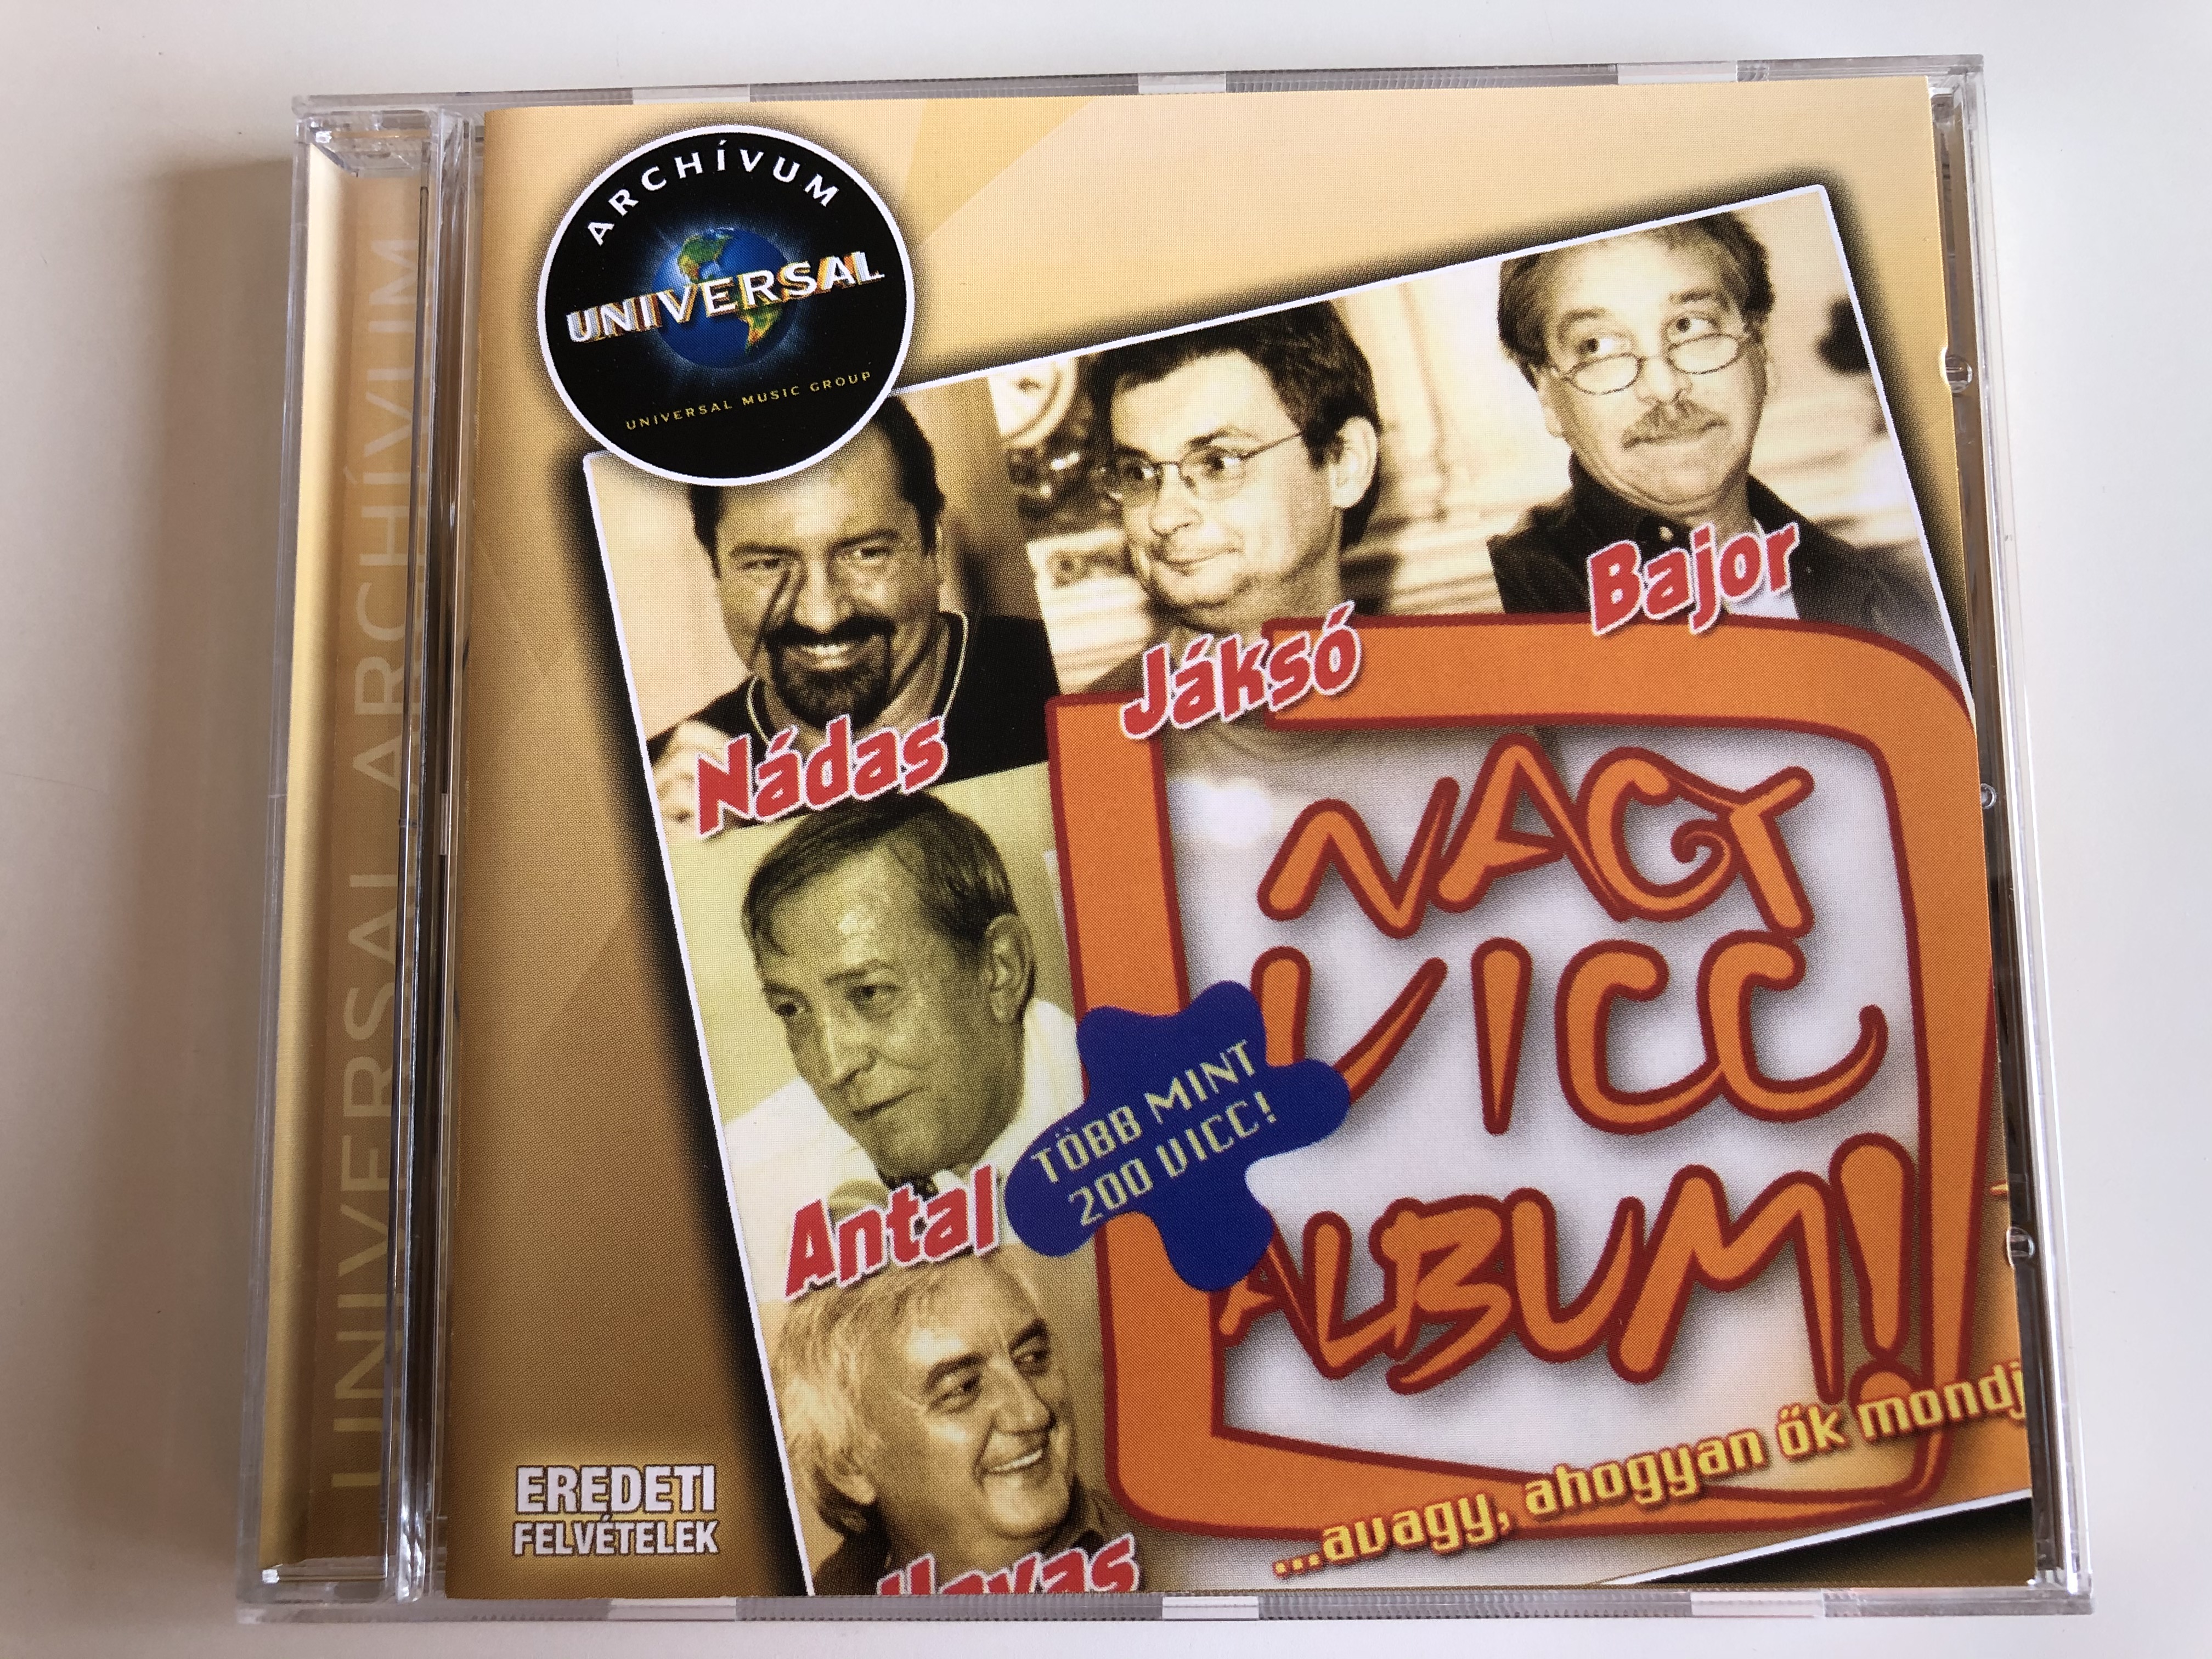 nagy-vicc-album-n-das-j-ks-bajor-antal-havas-universal-music-audio-cd-2008-176-593-9-1-.jpg